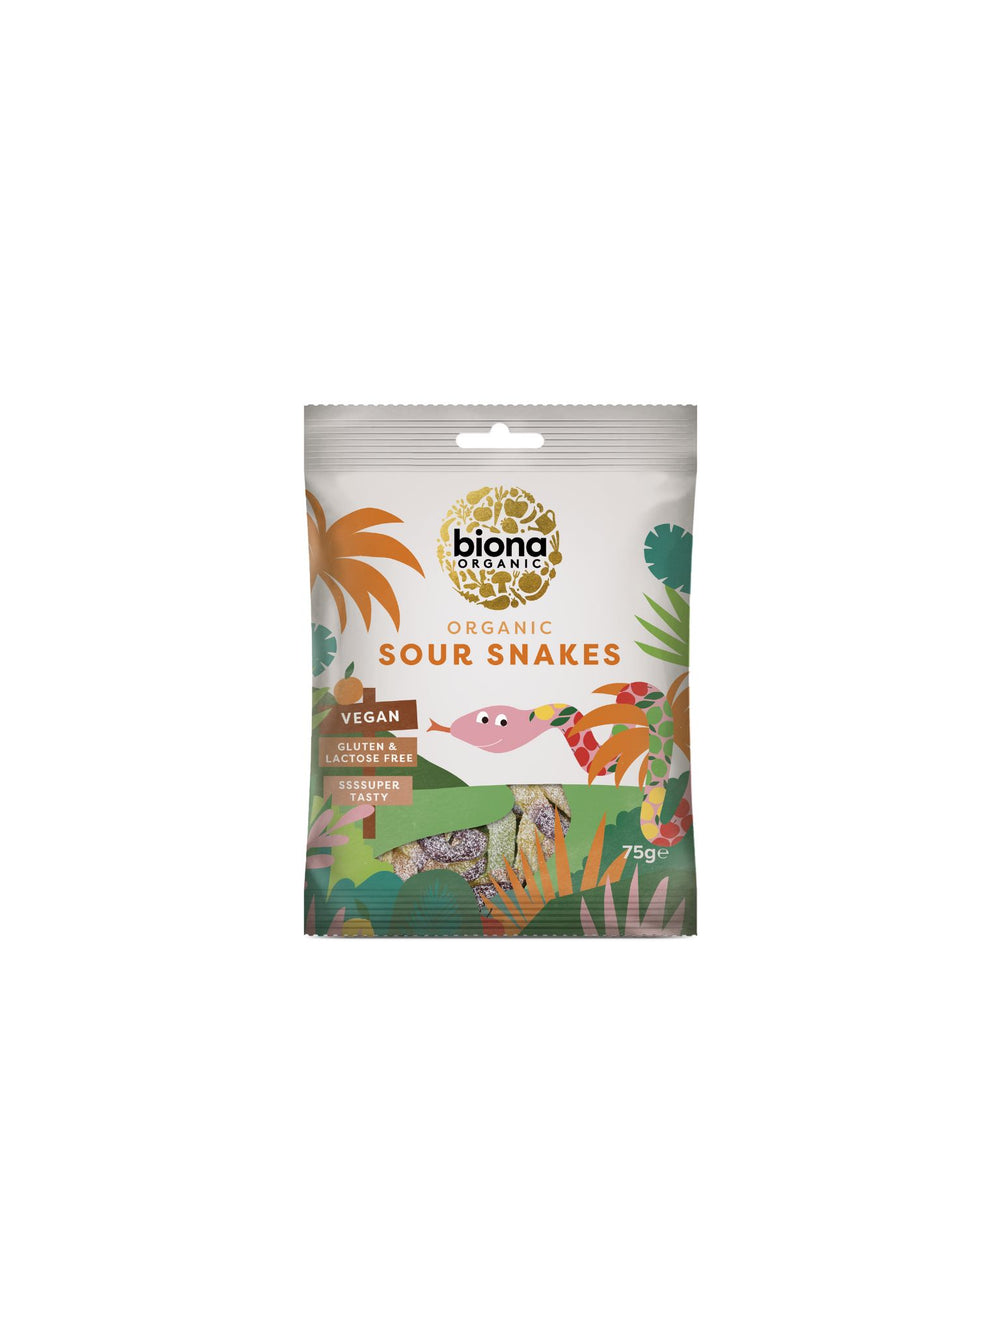 Sour Snakes - Biona Organics 75g